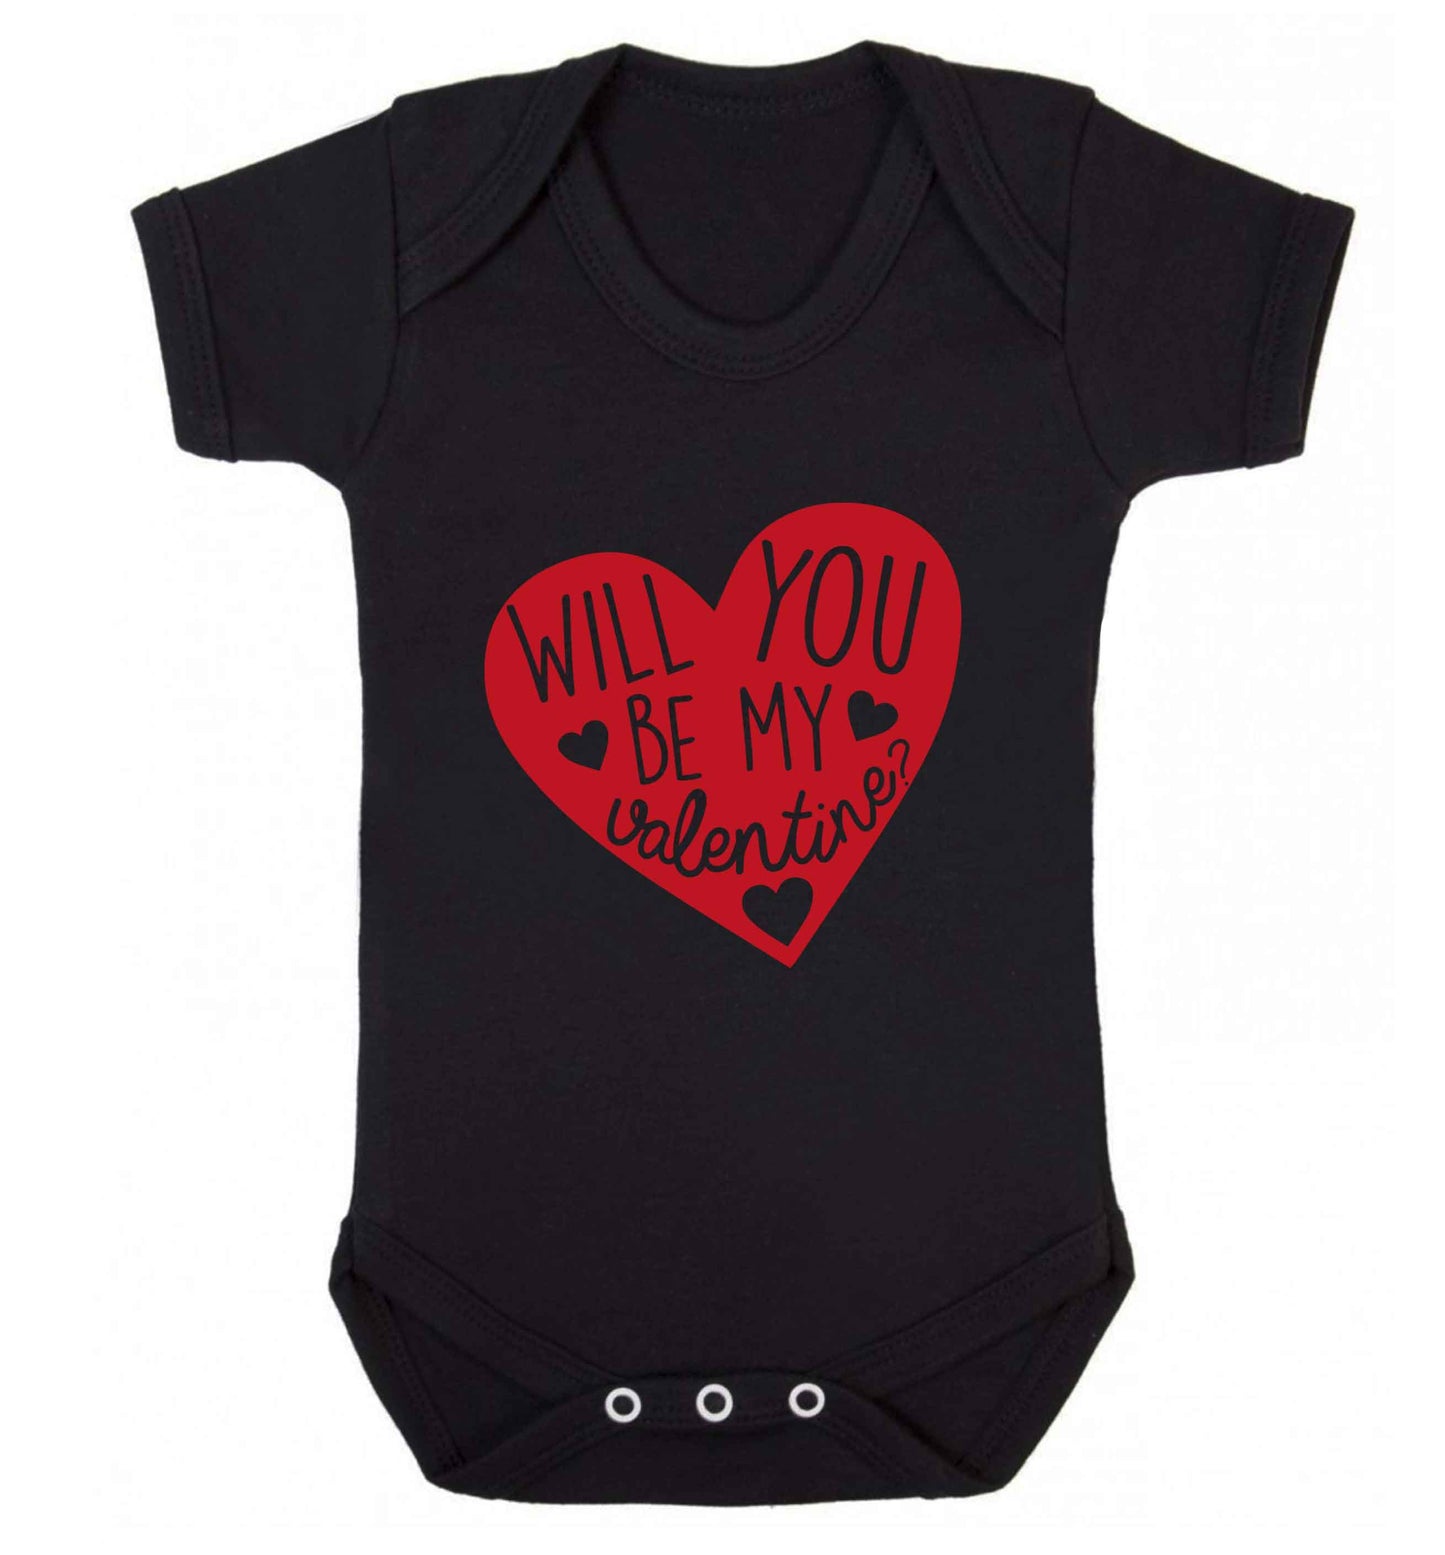 Will you be my valentine? baby vest black 18-24 months